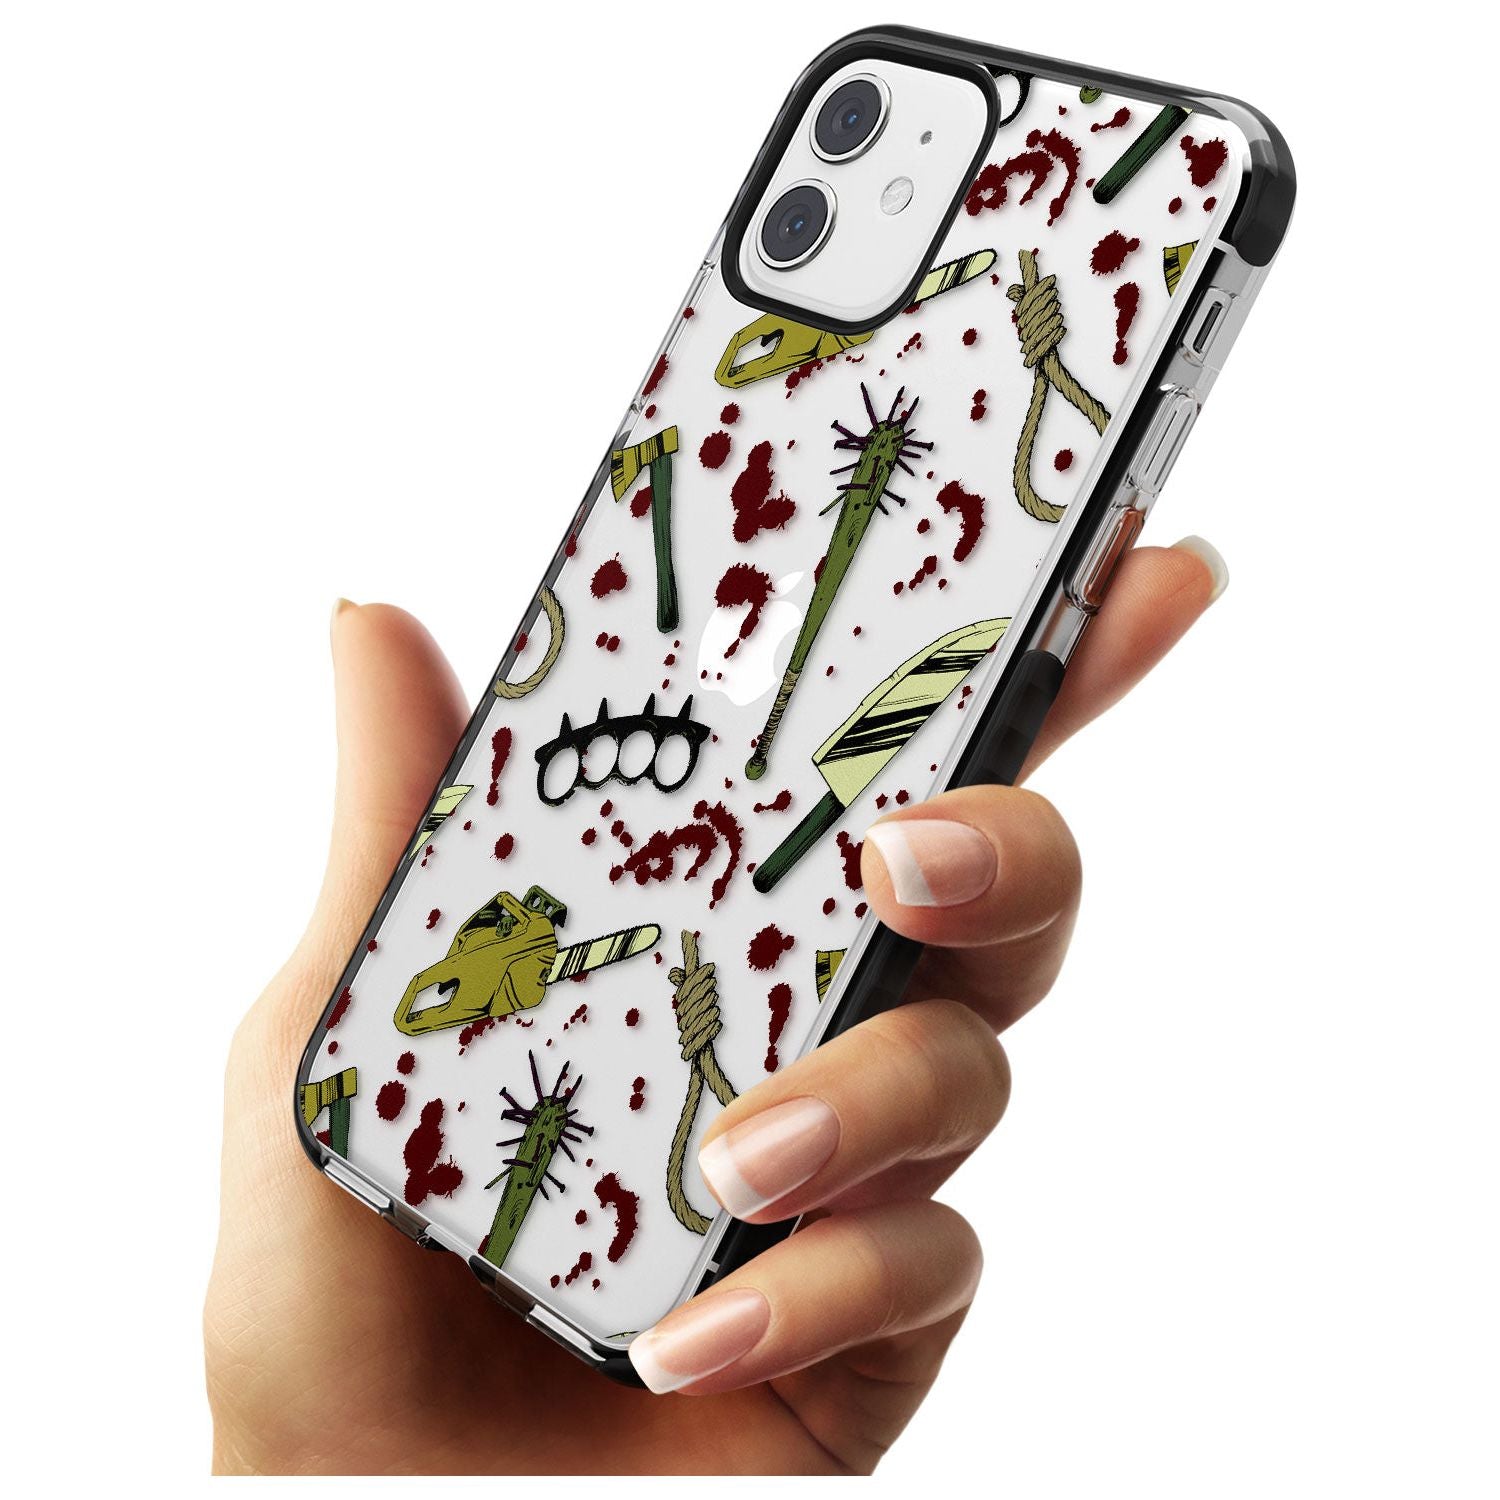 Movie Massacre Black Impact Phone Case for iPhone 11 Pro Max